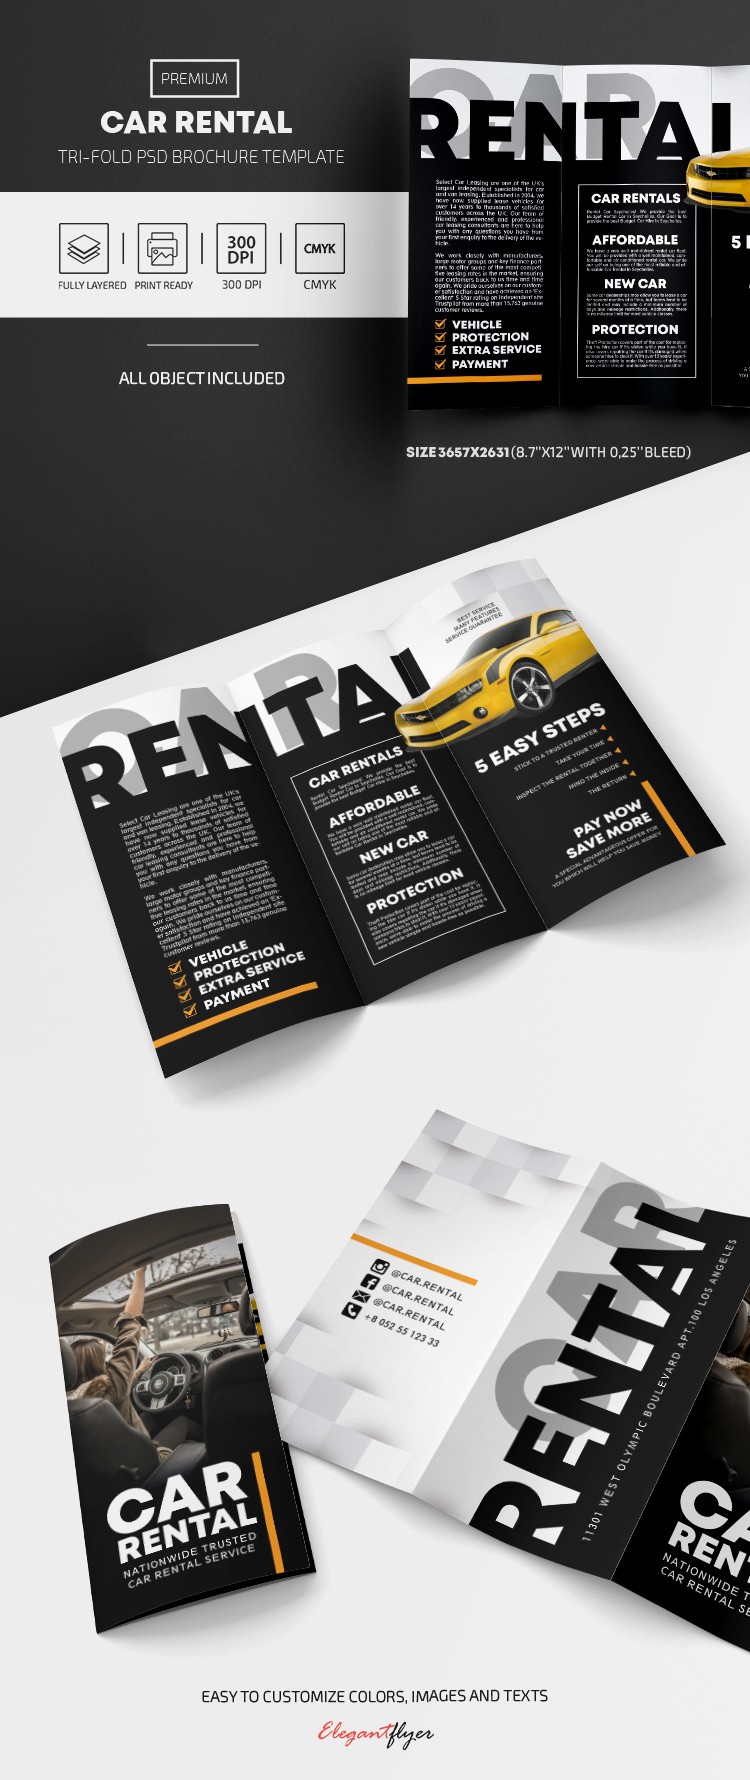 Car Rental Brochure by ElegantFlyer